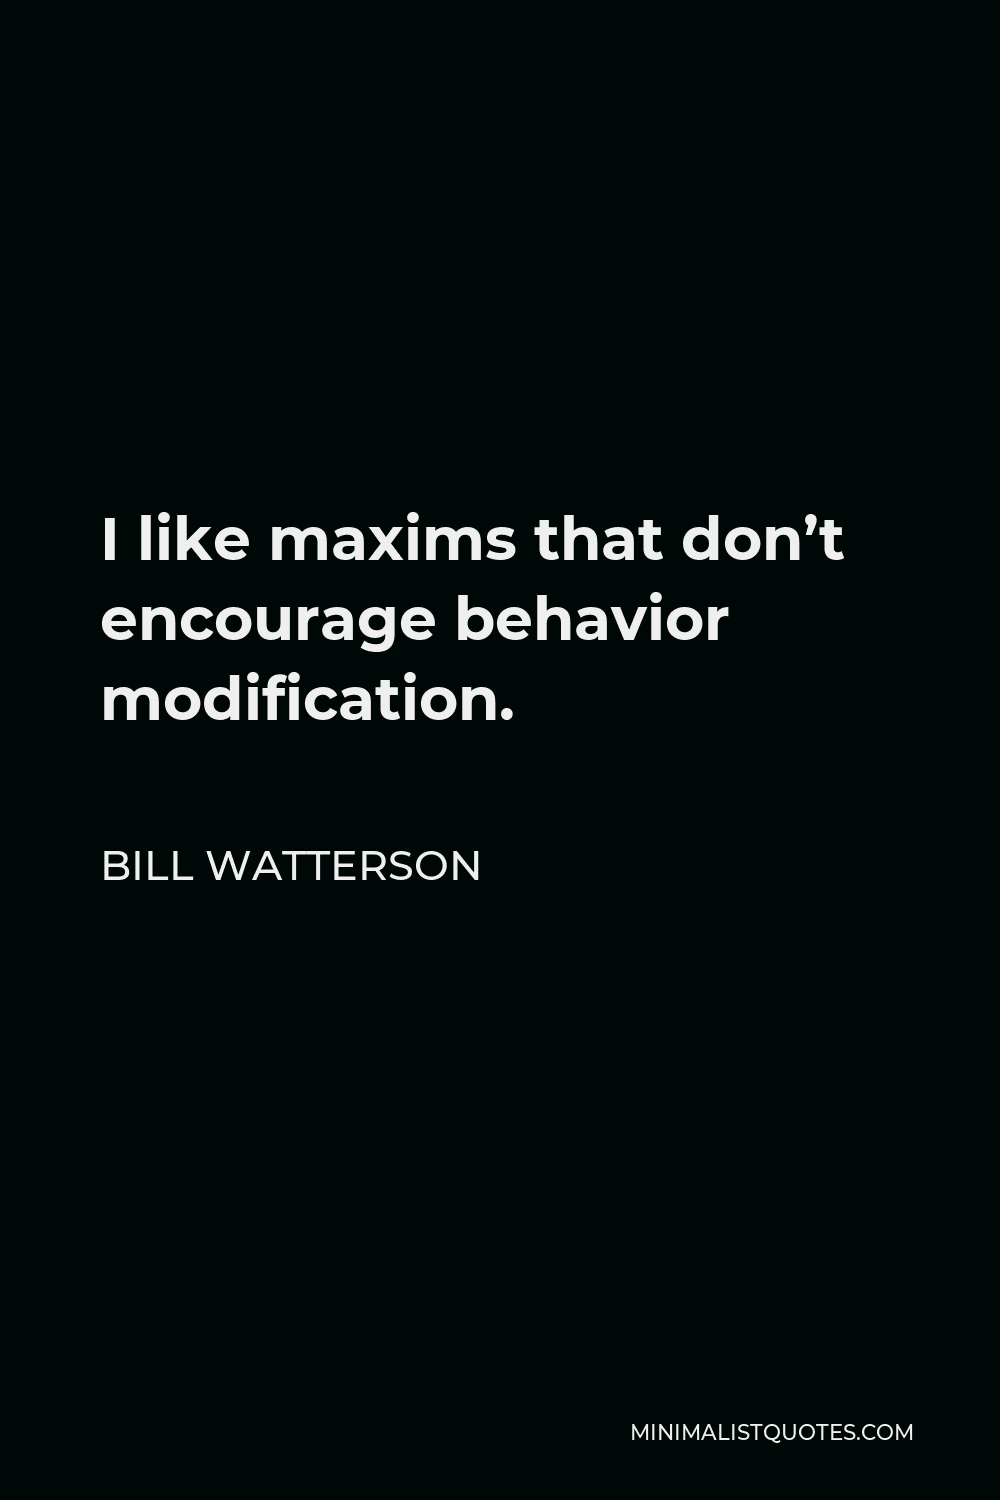 Bill Watterson Quote - I like maxims that don’t encourage behavior modification.